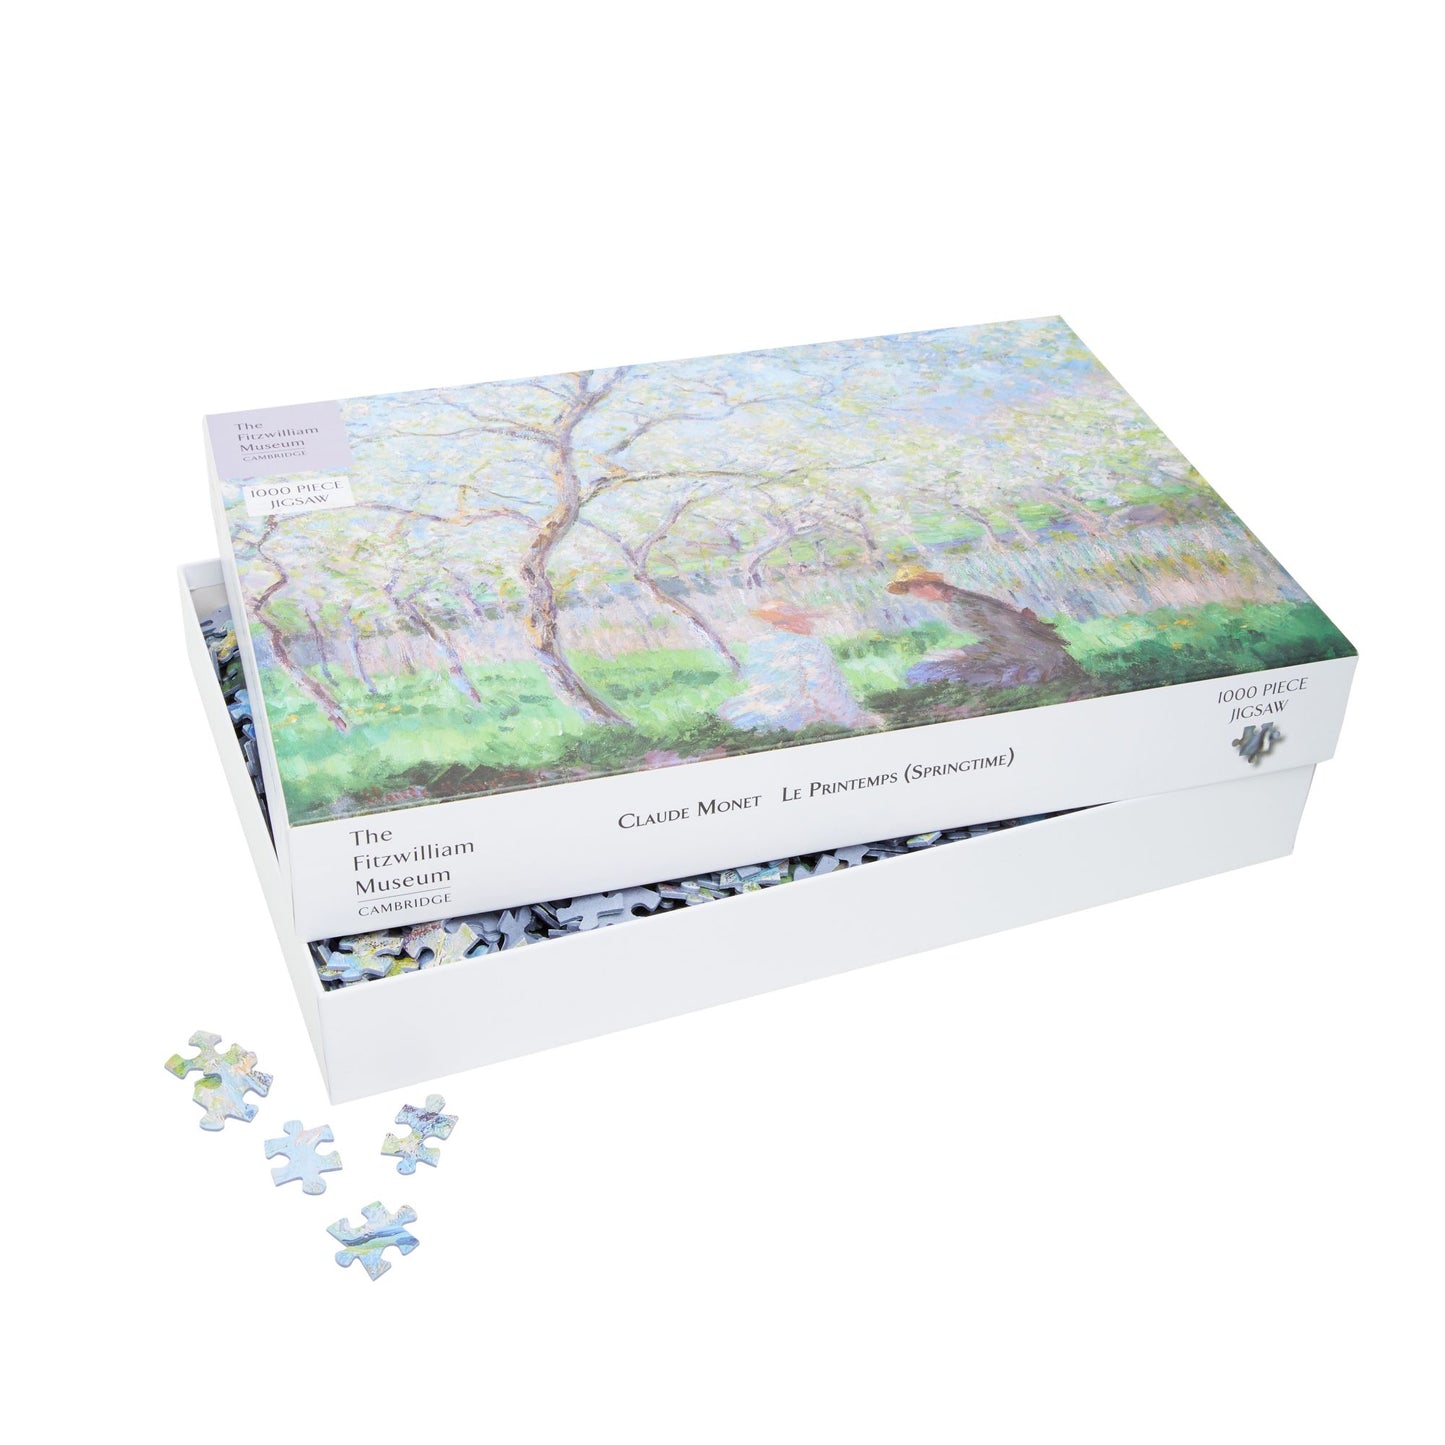 Springtime by Monet - 1000 pc jigsaw puzzle